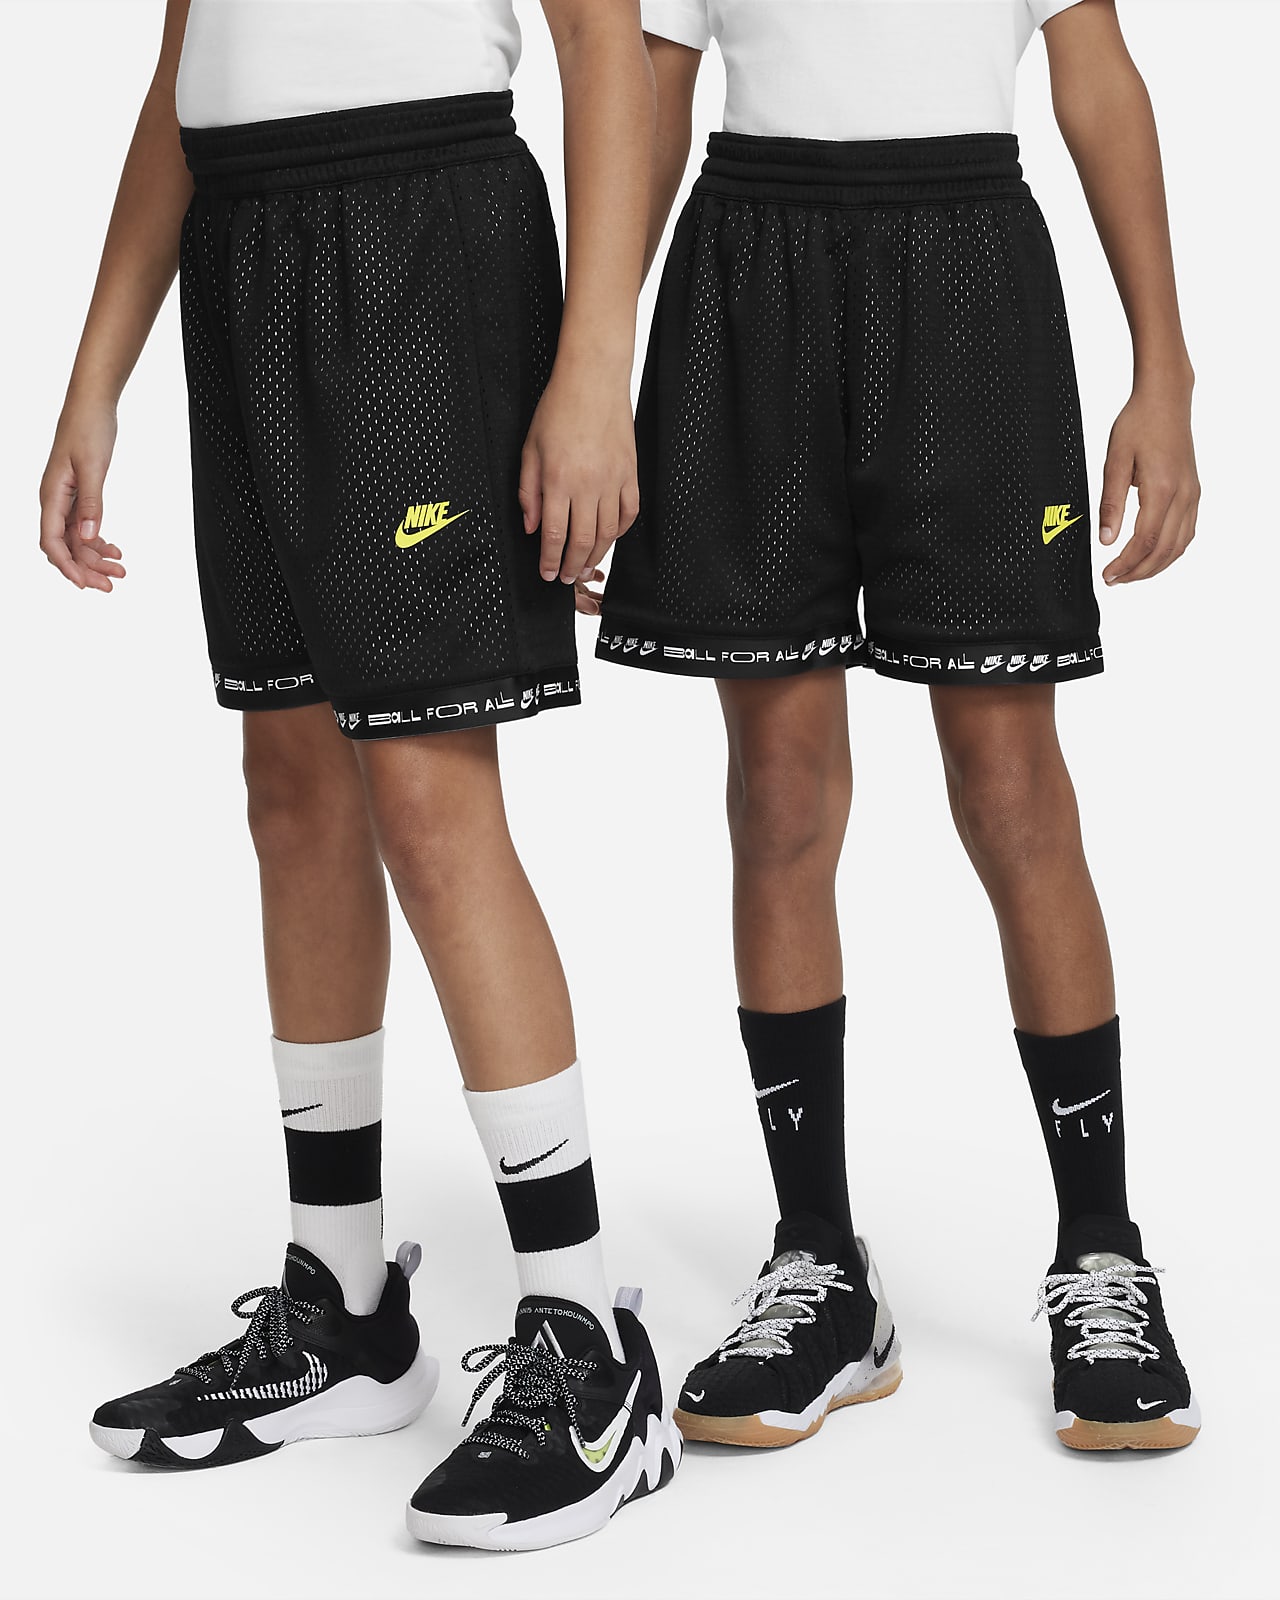 Nike Culture of Basketball wendbares Basketballshorts für ältere Kinder